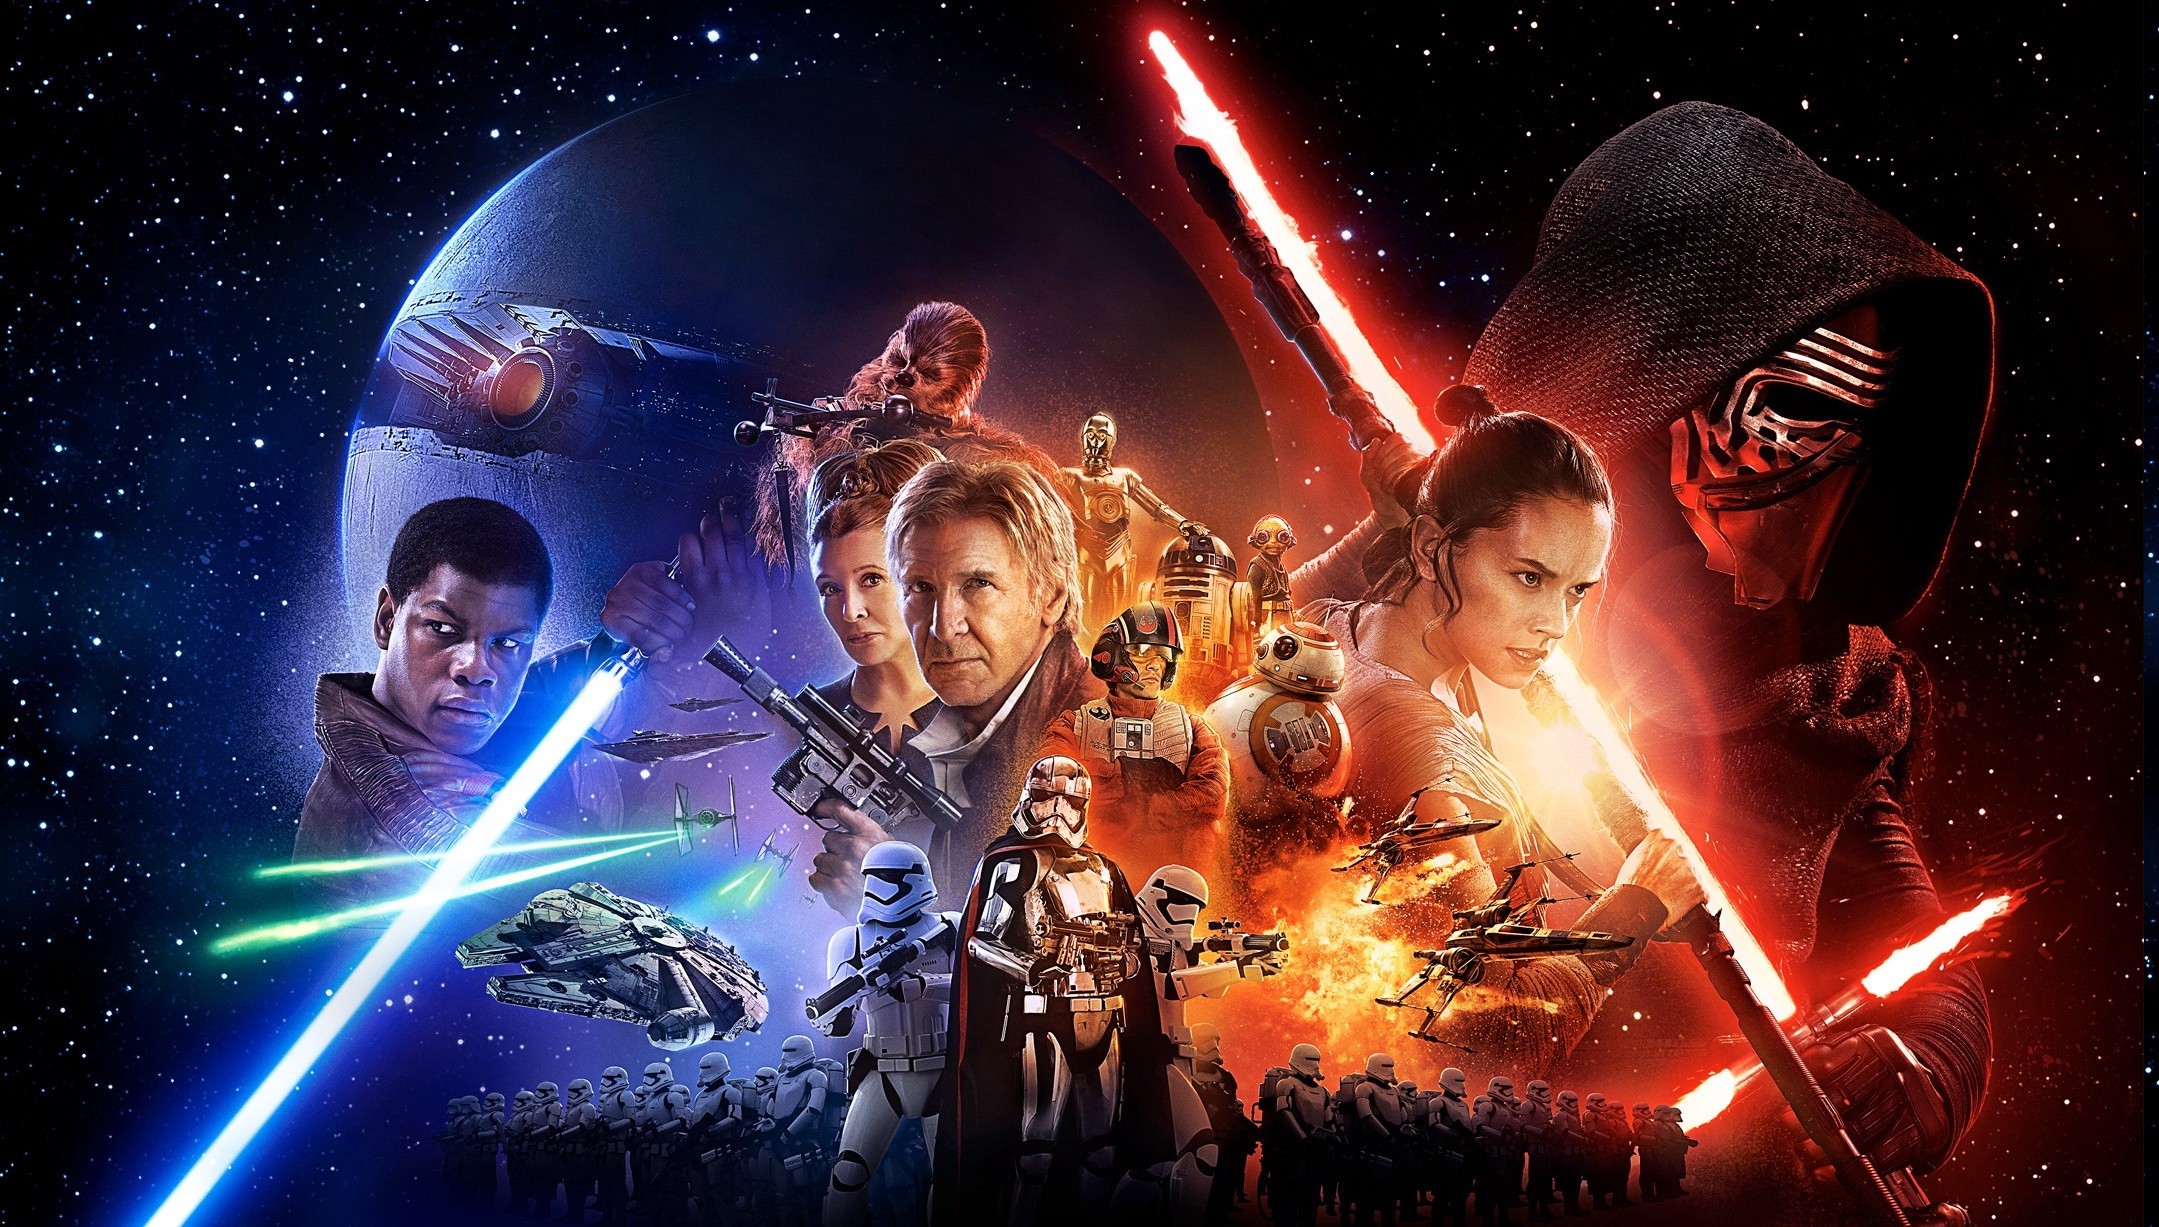 Star Wars, Star Wars Episode VII The Force Awakens, Kylo Ren, Han Solo, BB 8, Chewbacca, Captain Phasma, R2 D2, C 3PO, Luke Skywalker, Stormtrooper,